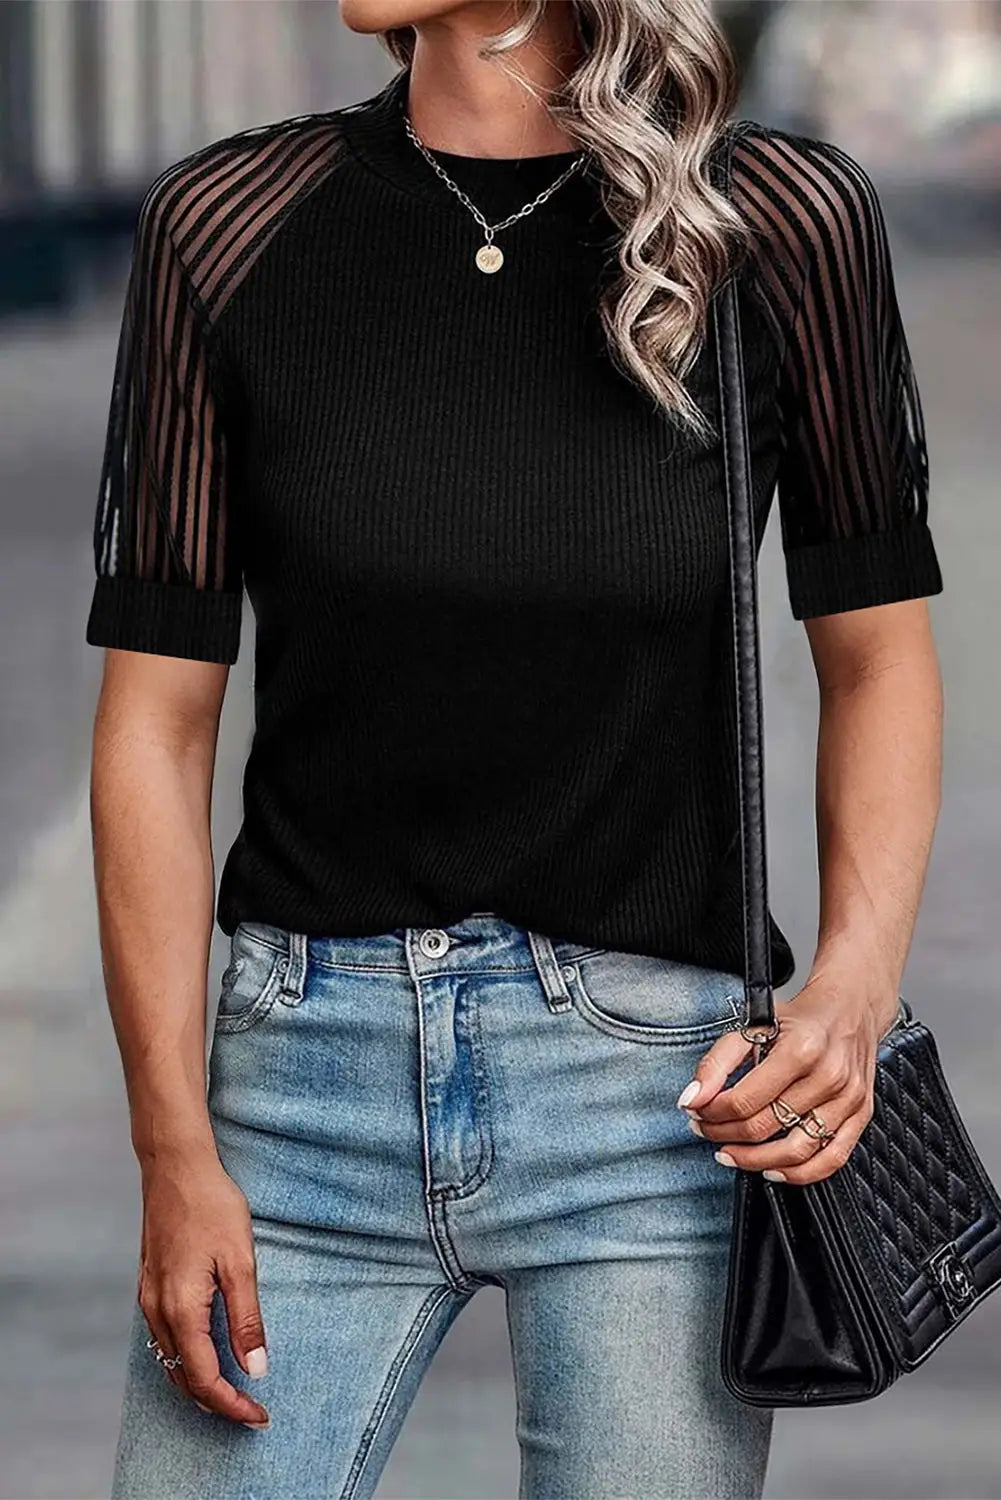 Black striped mesh sleeve t shirt - s / 93% viscose + 7% elastane - tops/tops & tees